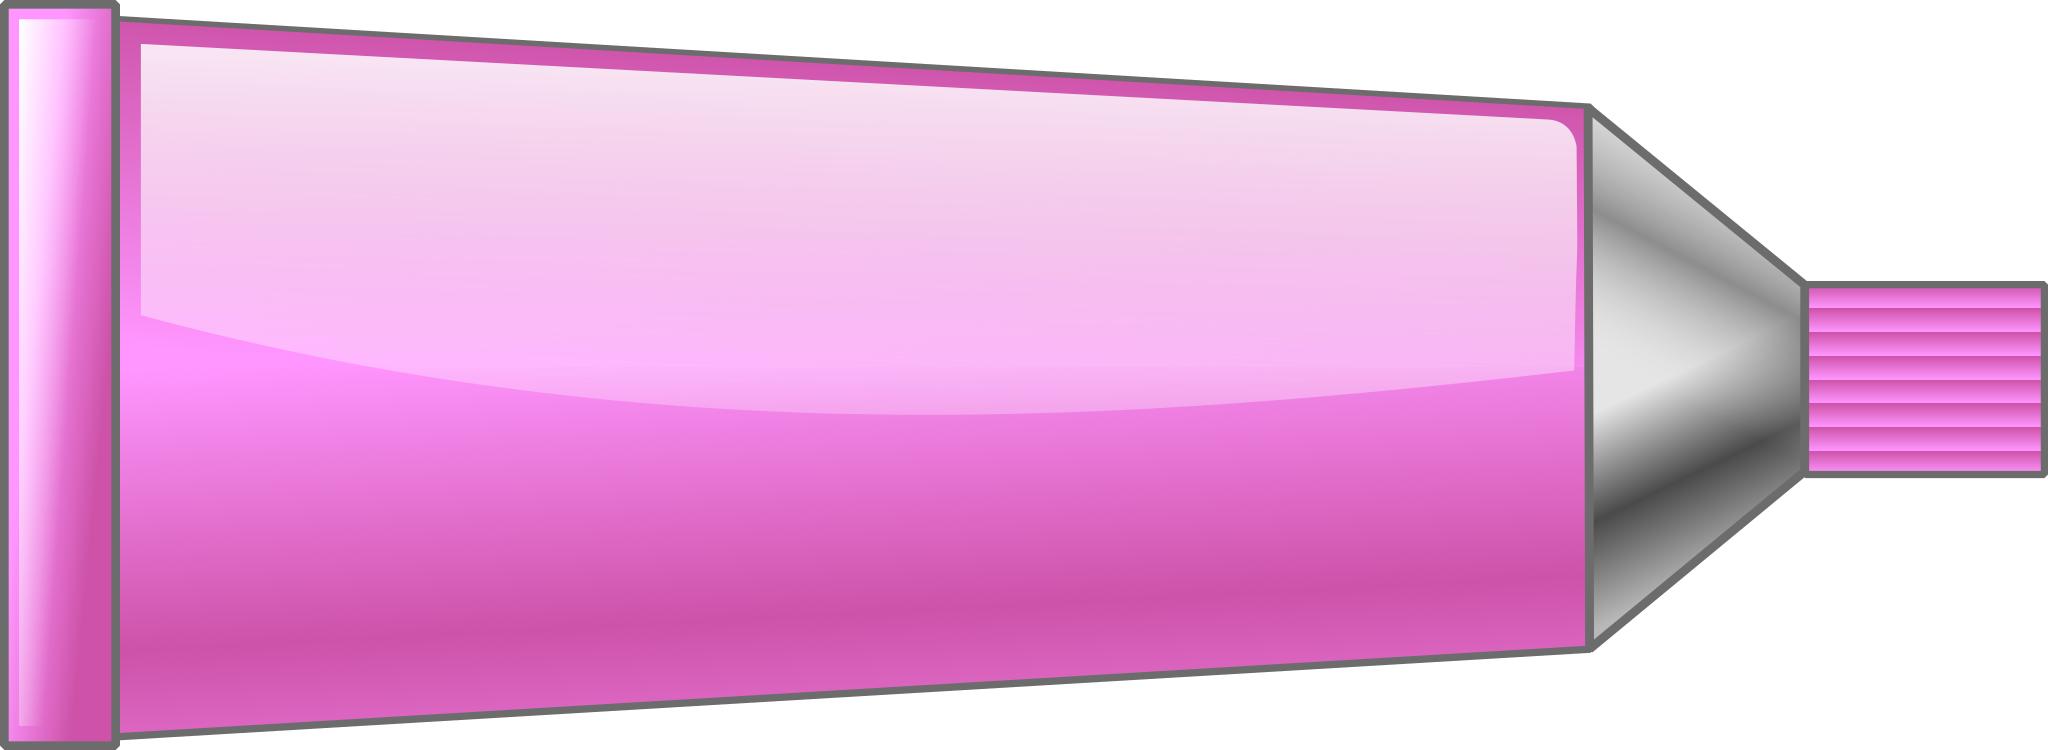 Розовый тюбик